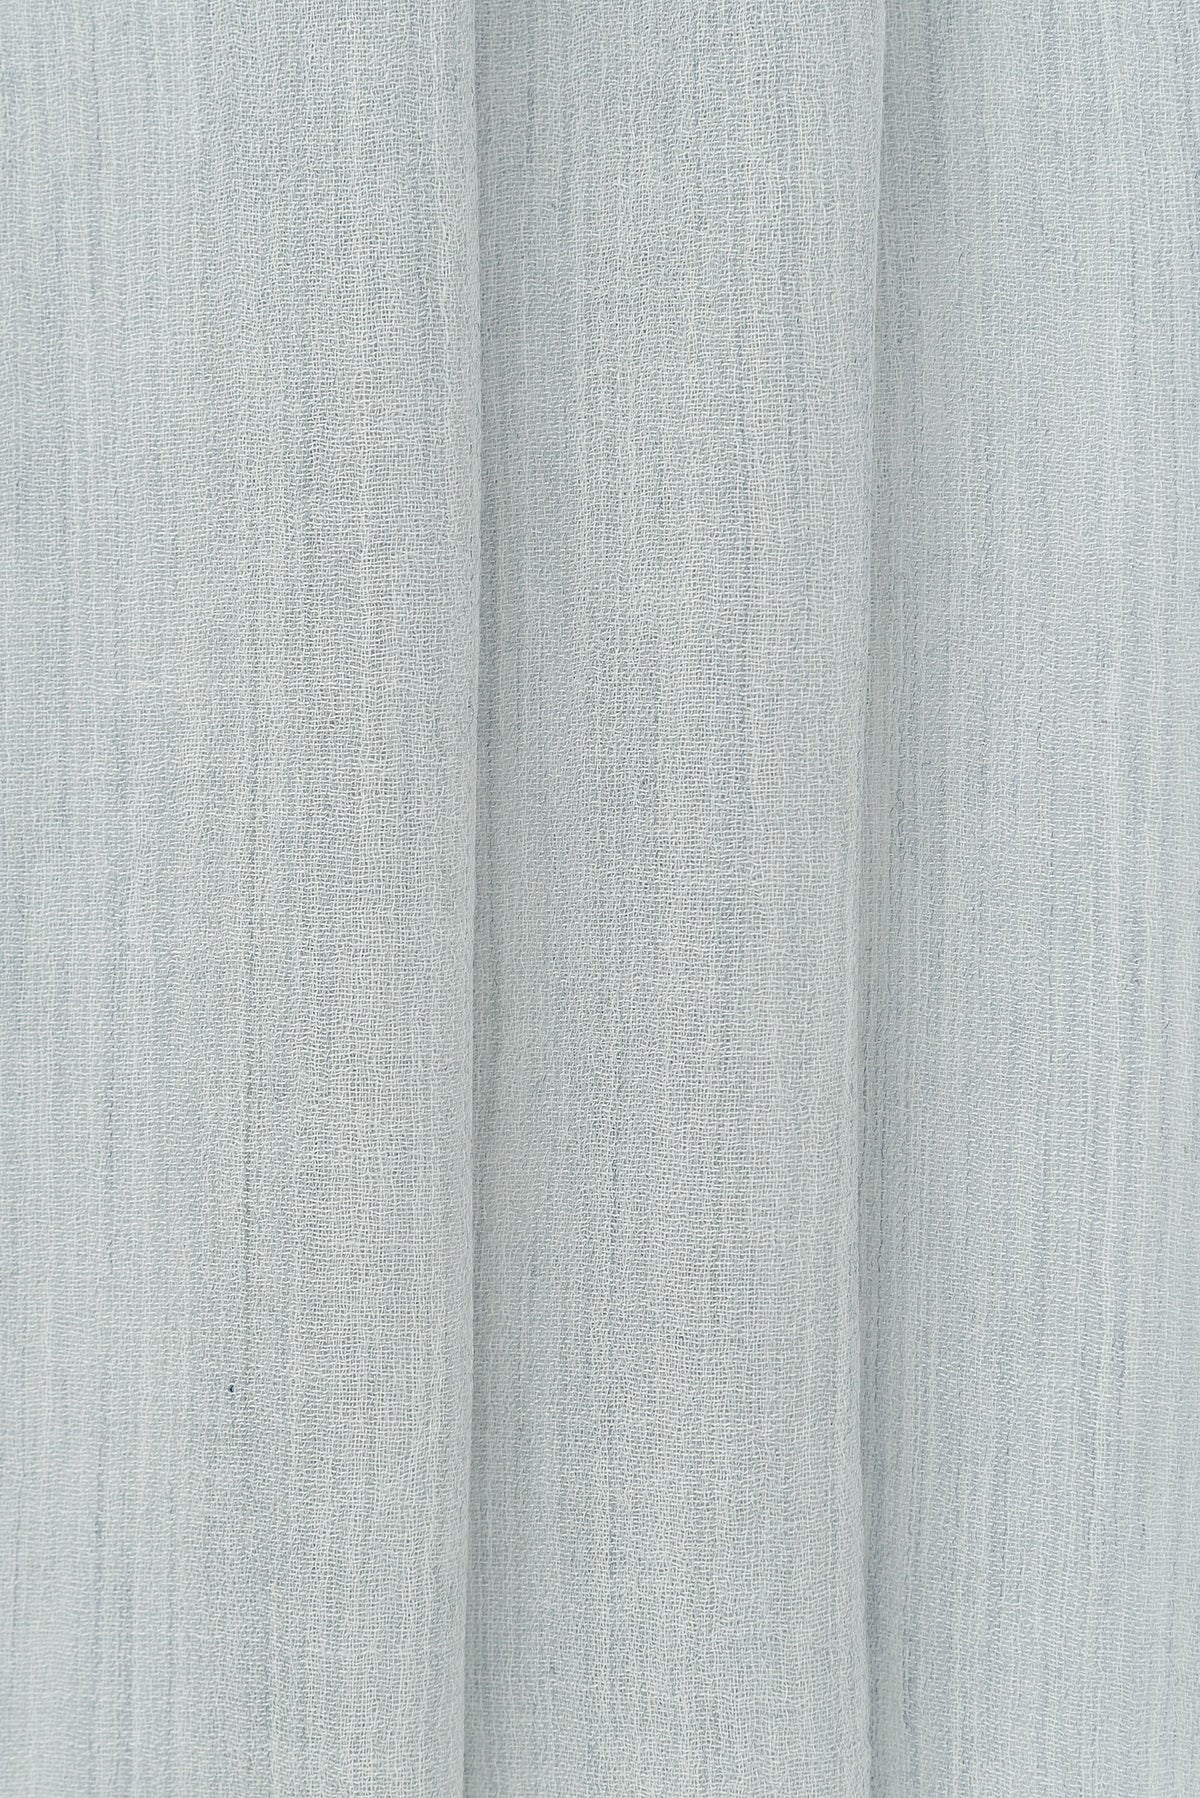 Serenity Blue-Grey 8161688-01